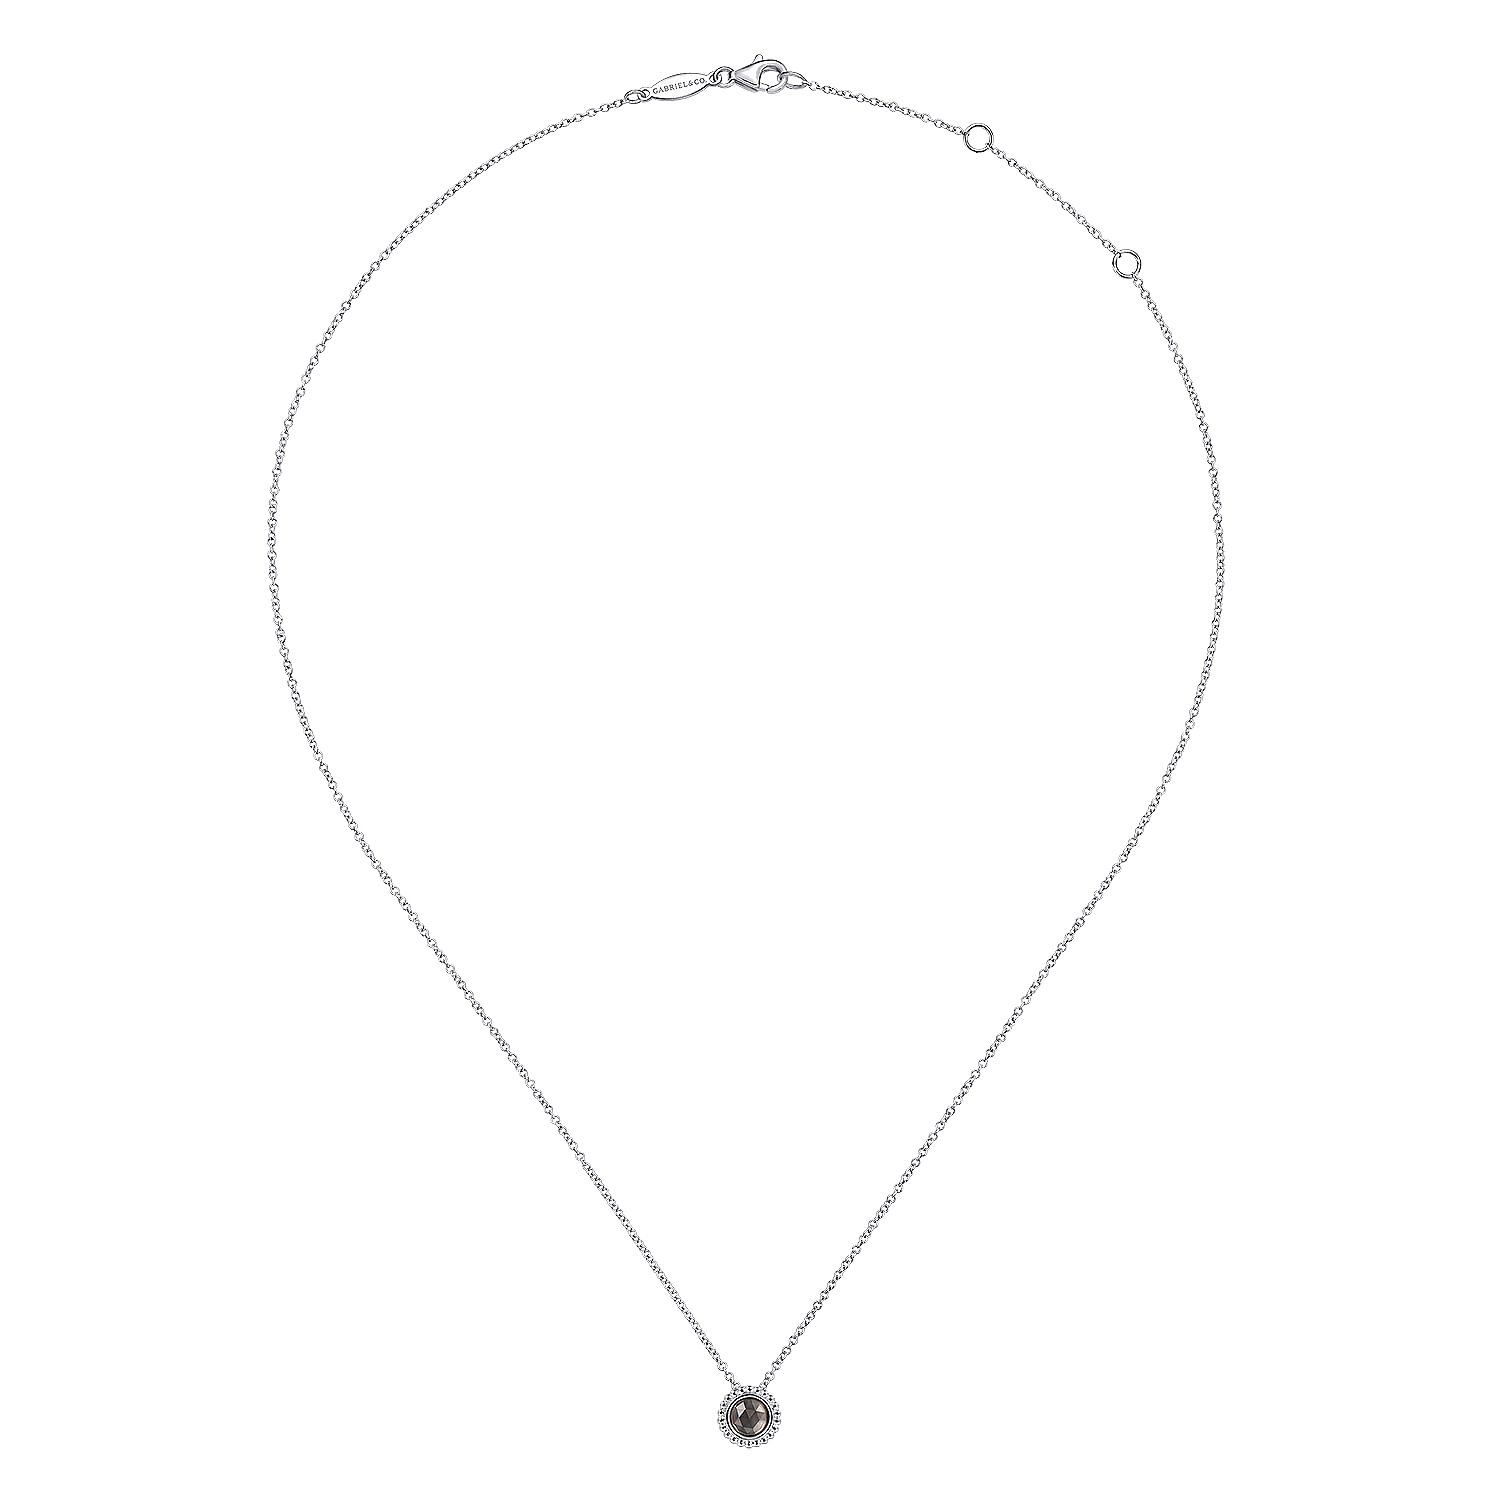 925 Sterling Silver Bujukan Rock Crystal& Black MOP Pendant Necklace